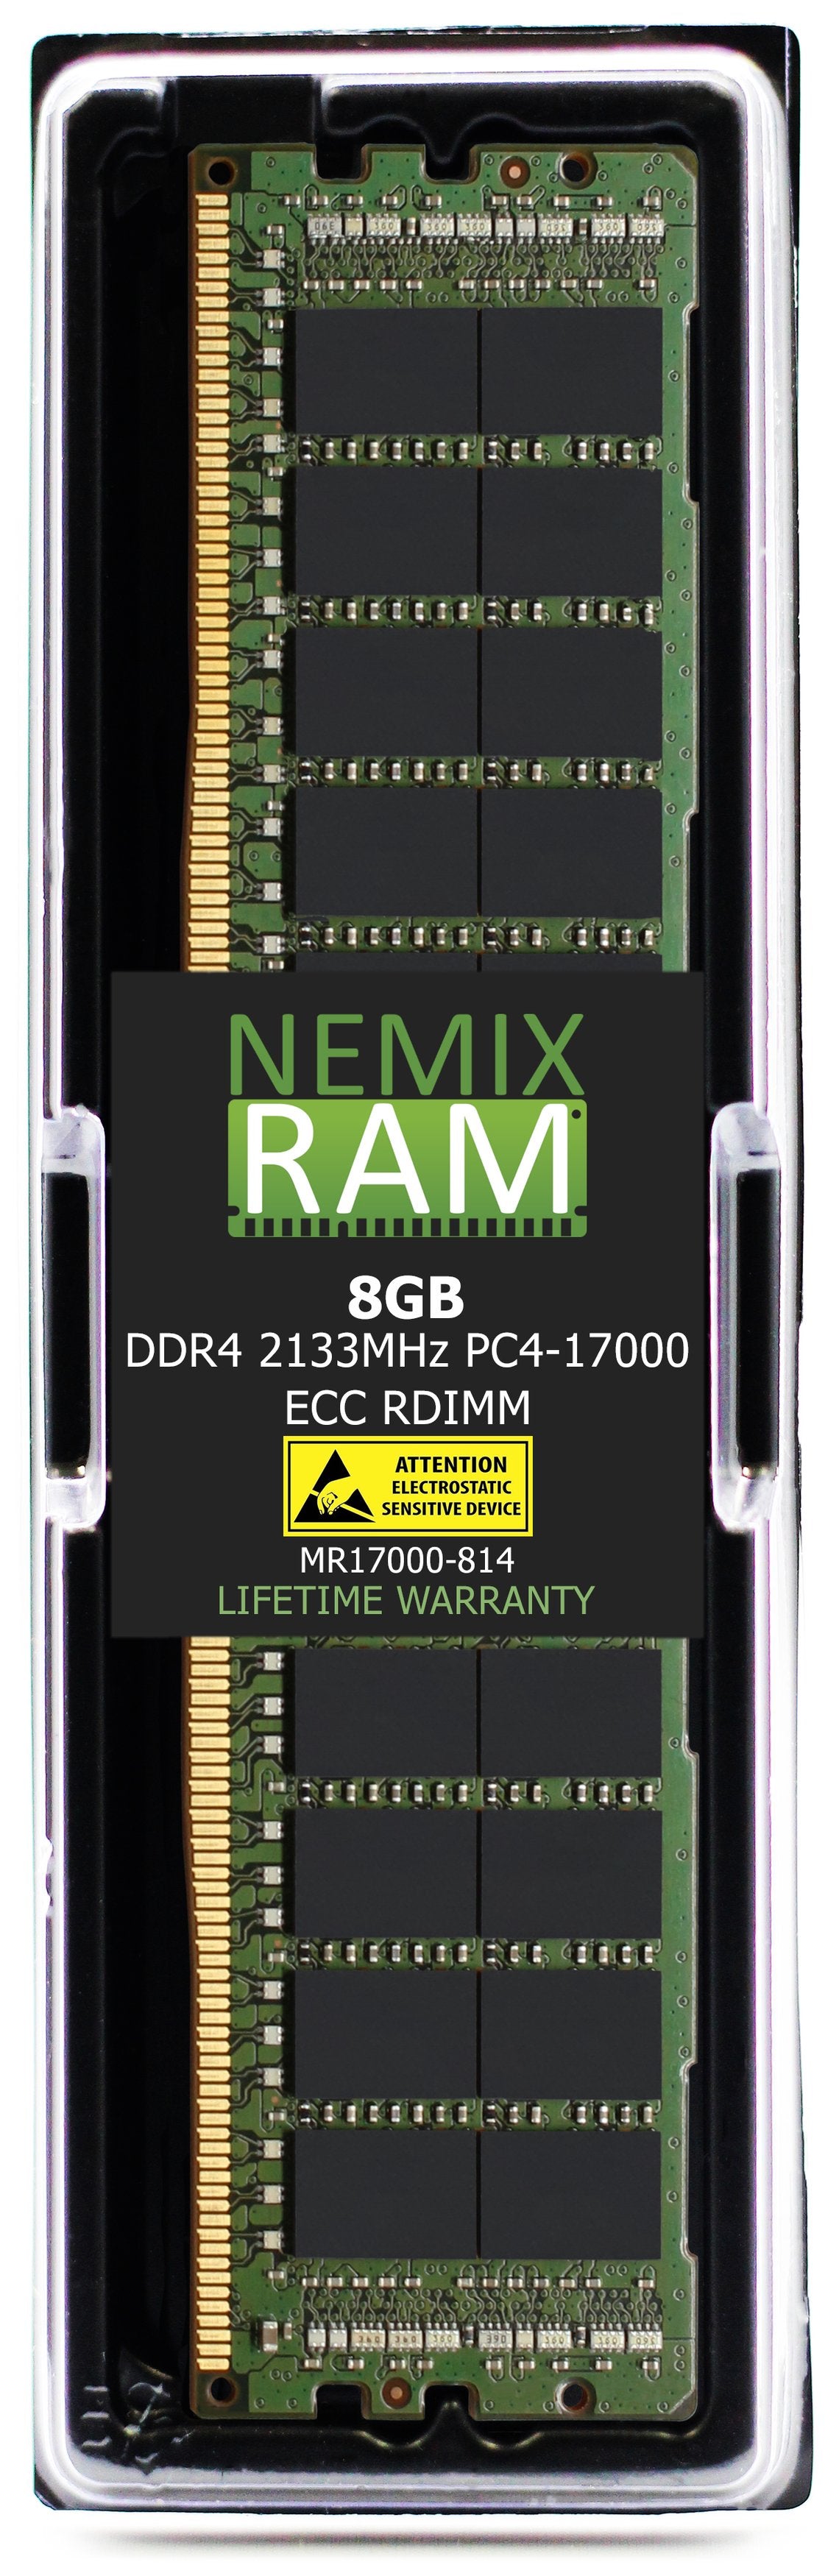 NEC Express5800 E120f-M Memory Module N8102-626F 8GB DDR4 2133MHZ PC4-17000 RDIMM